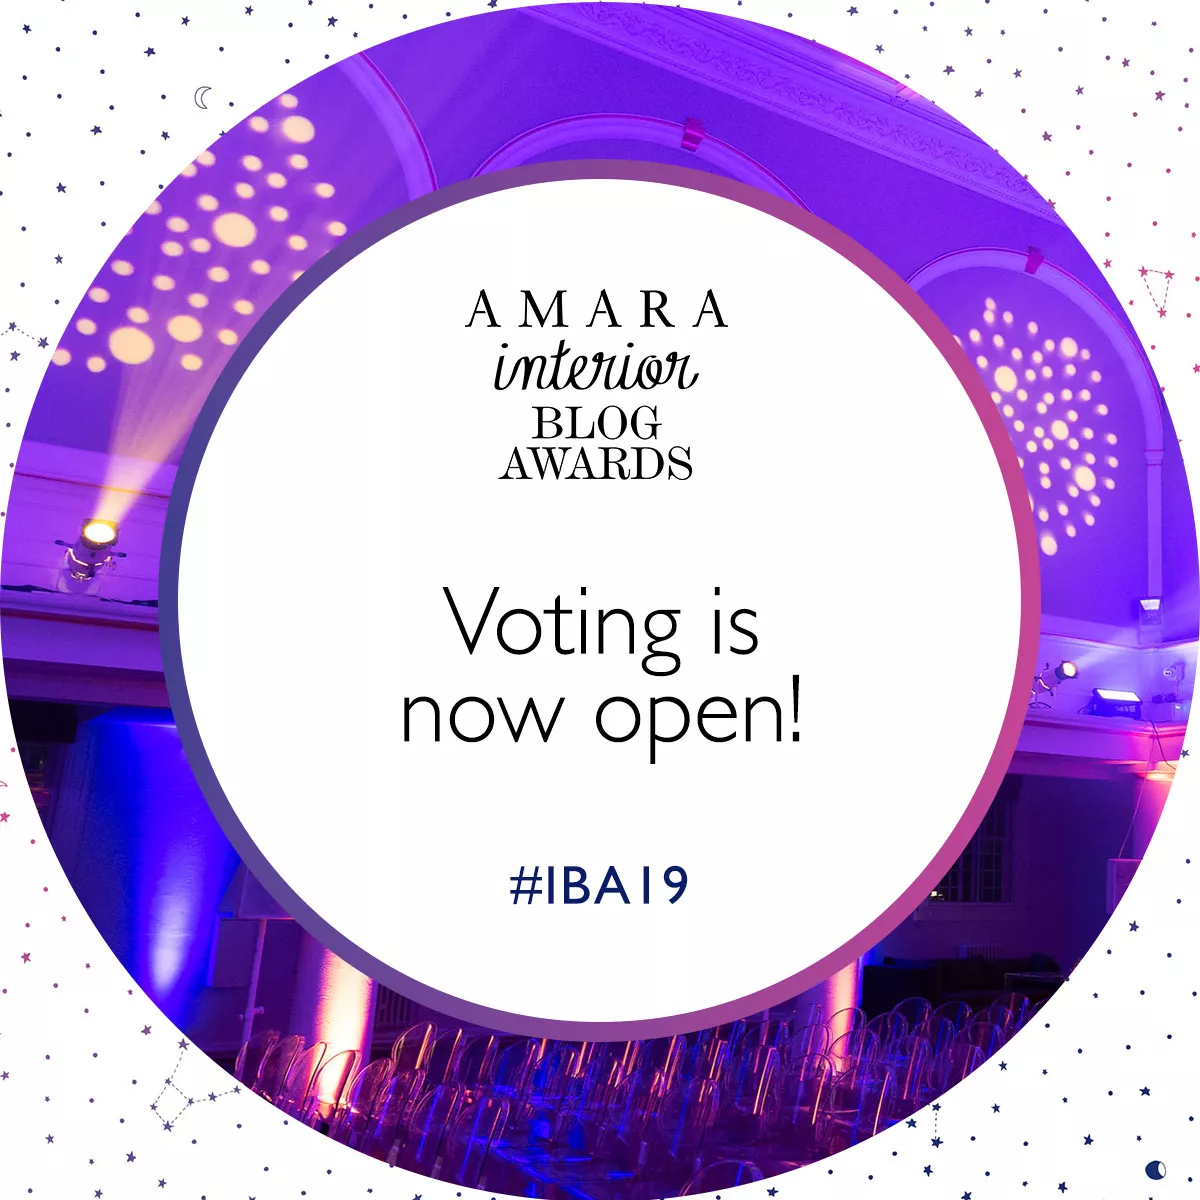 The Amara interiors blog awards voting banner 2019.